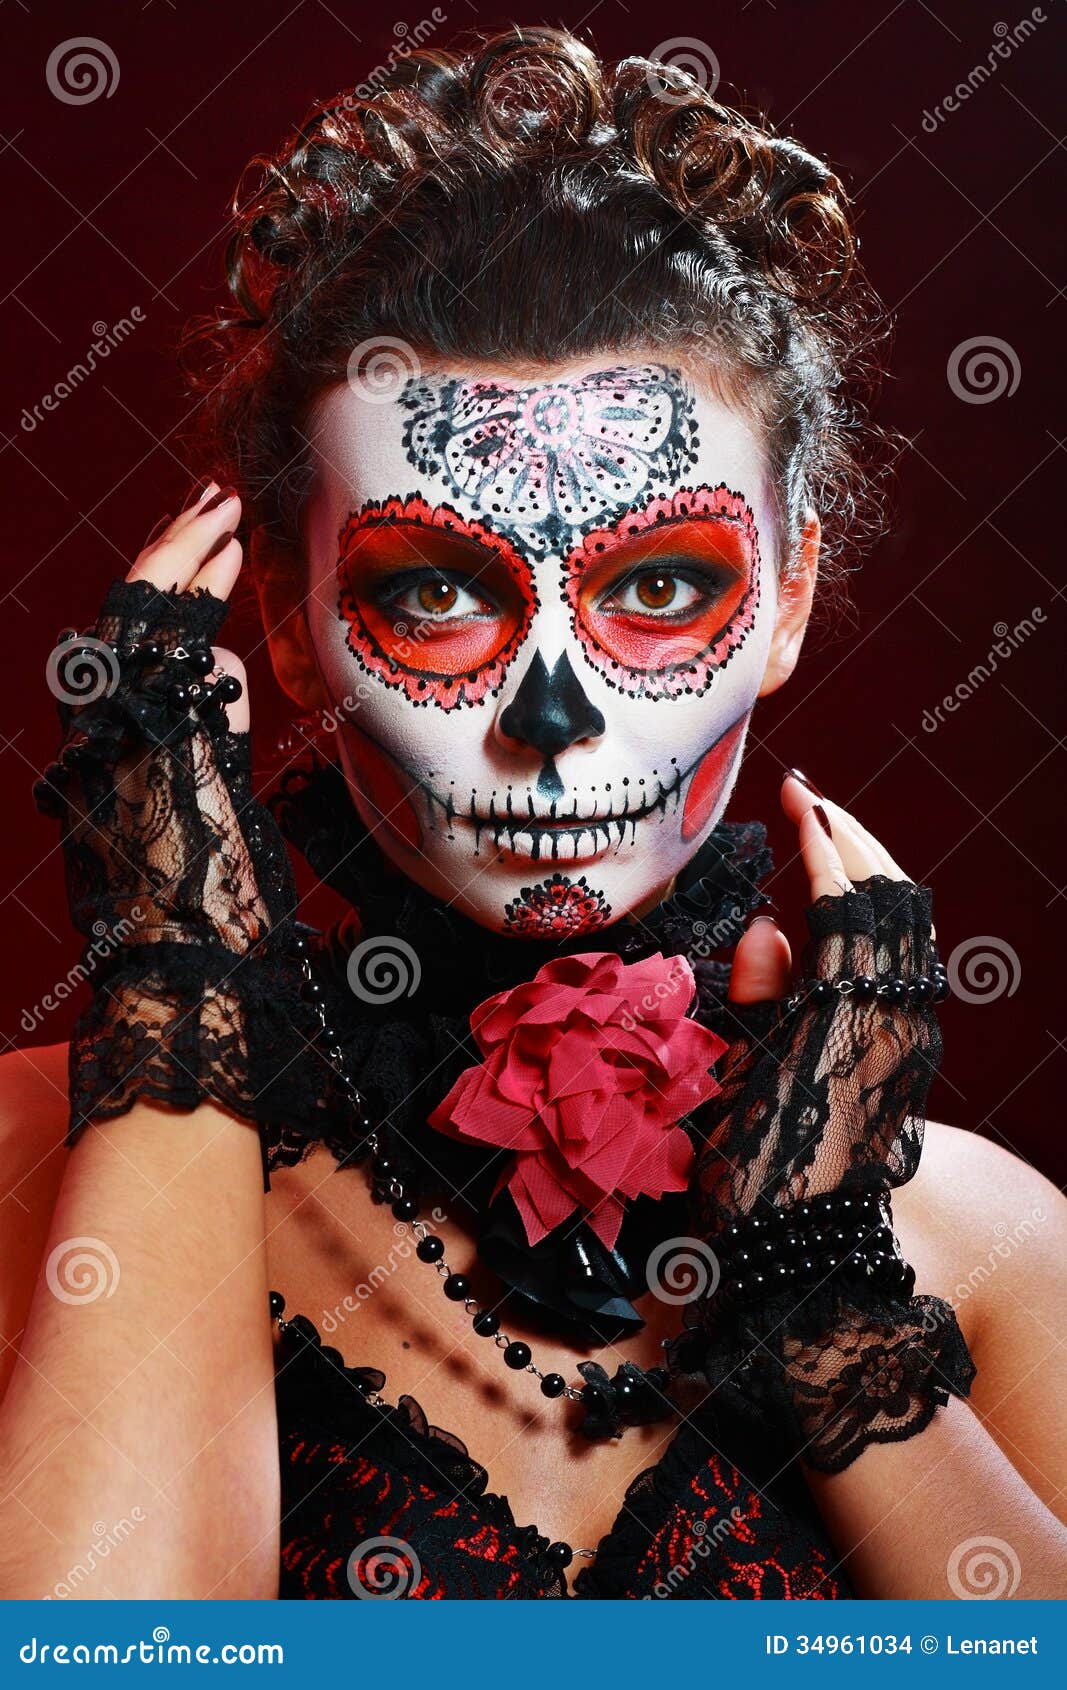 Halloween Make Up Sugar Skull Stock Images - Image: 34961034